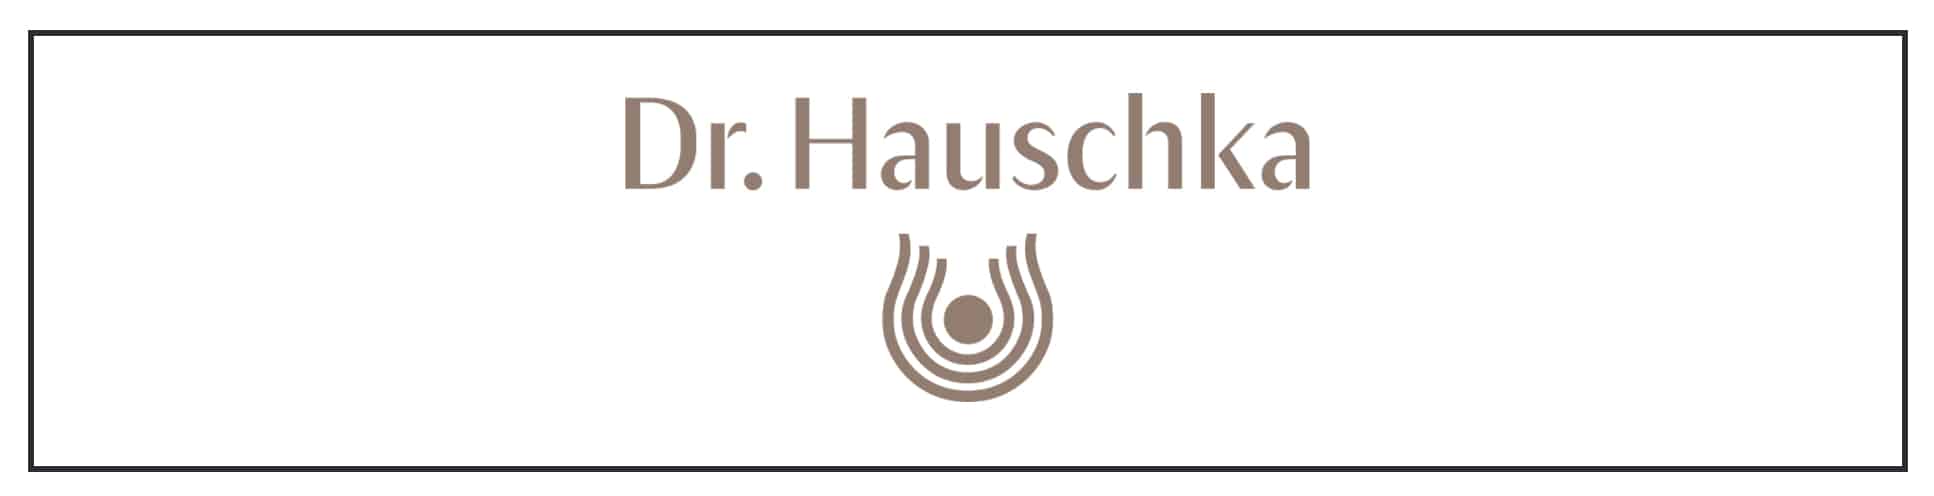 Dr hausschka logo on a white background.